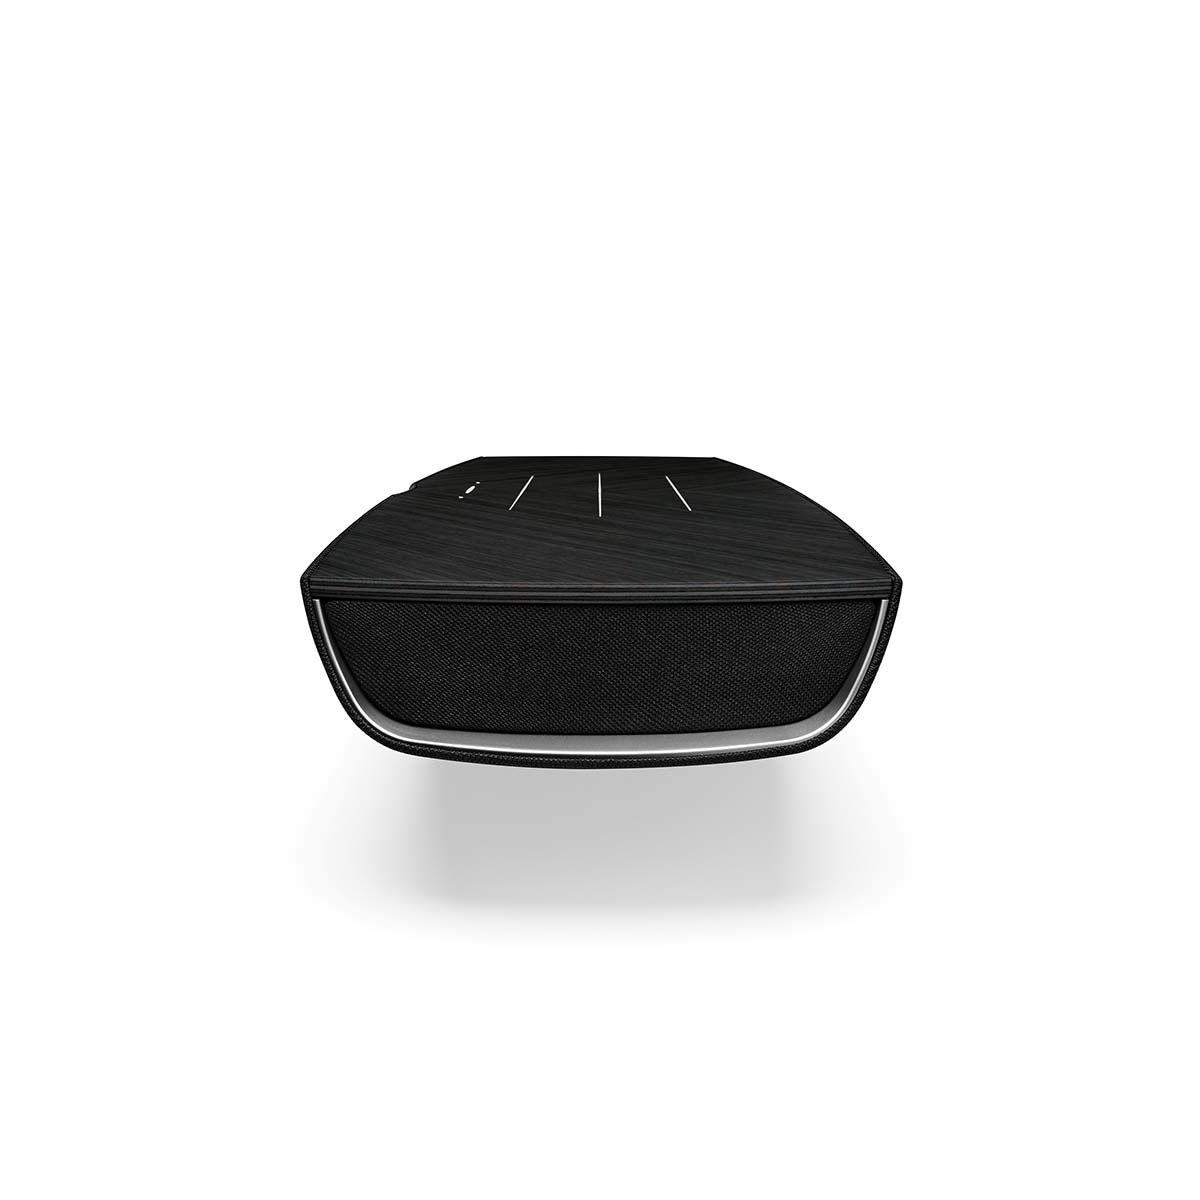 Sonus Faber Omnia Wireless Smart Speaker, Graphite, side view